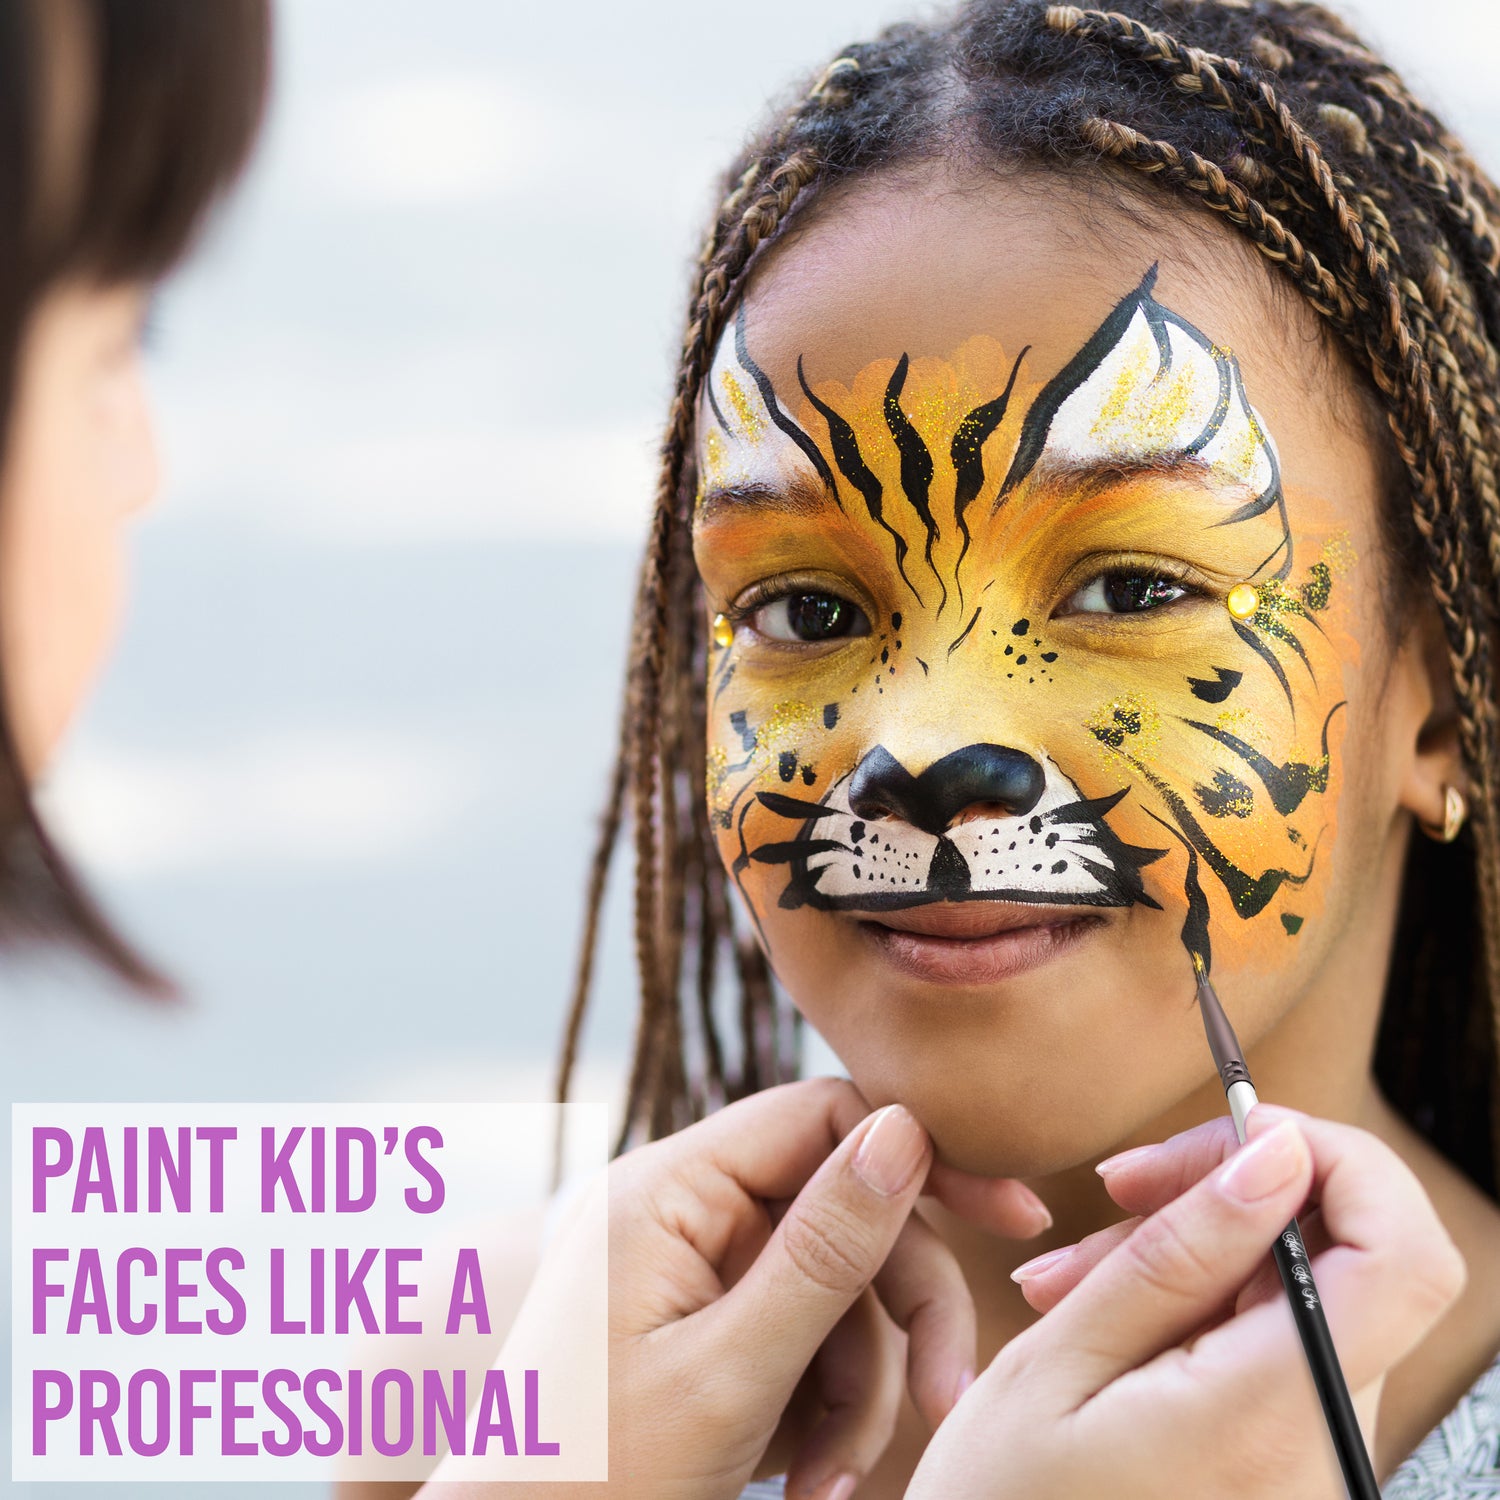 Face Paint Kit for Kids - 58 PCS. Set with Water Based - Quick Dry - Non-Toxic Sensitive Skin Paints - Glitters - Sponge Applicators - Professional